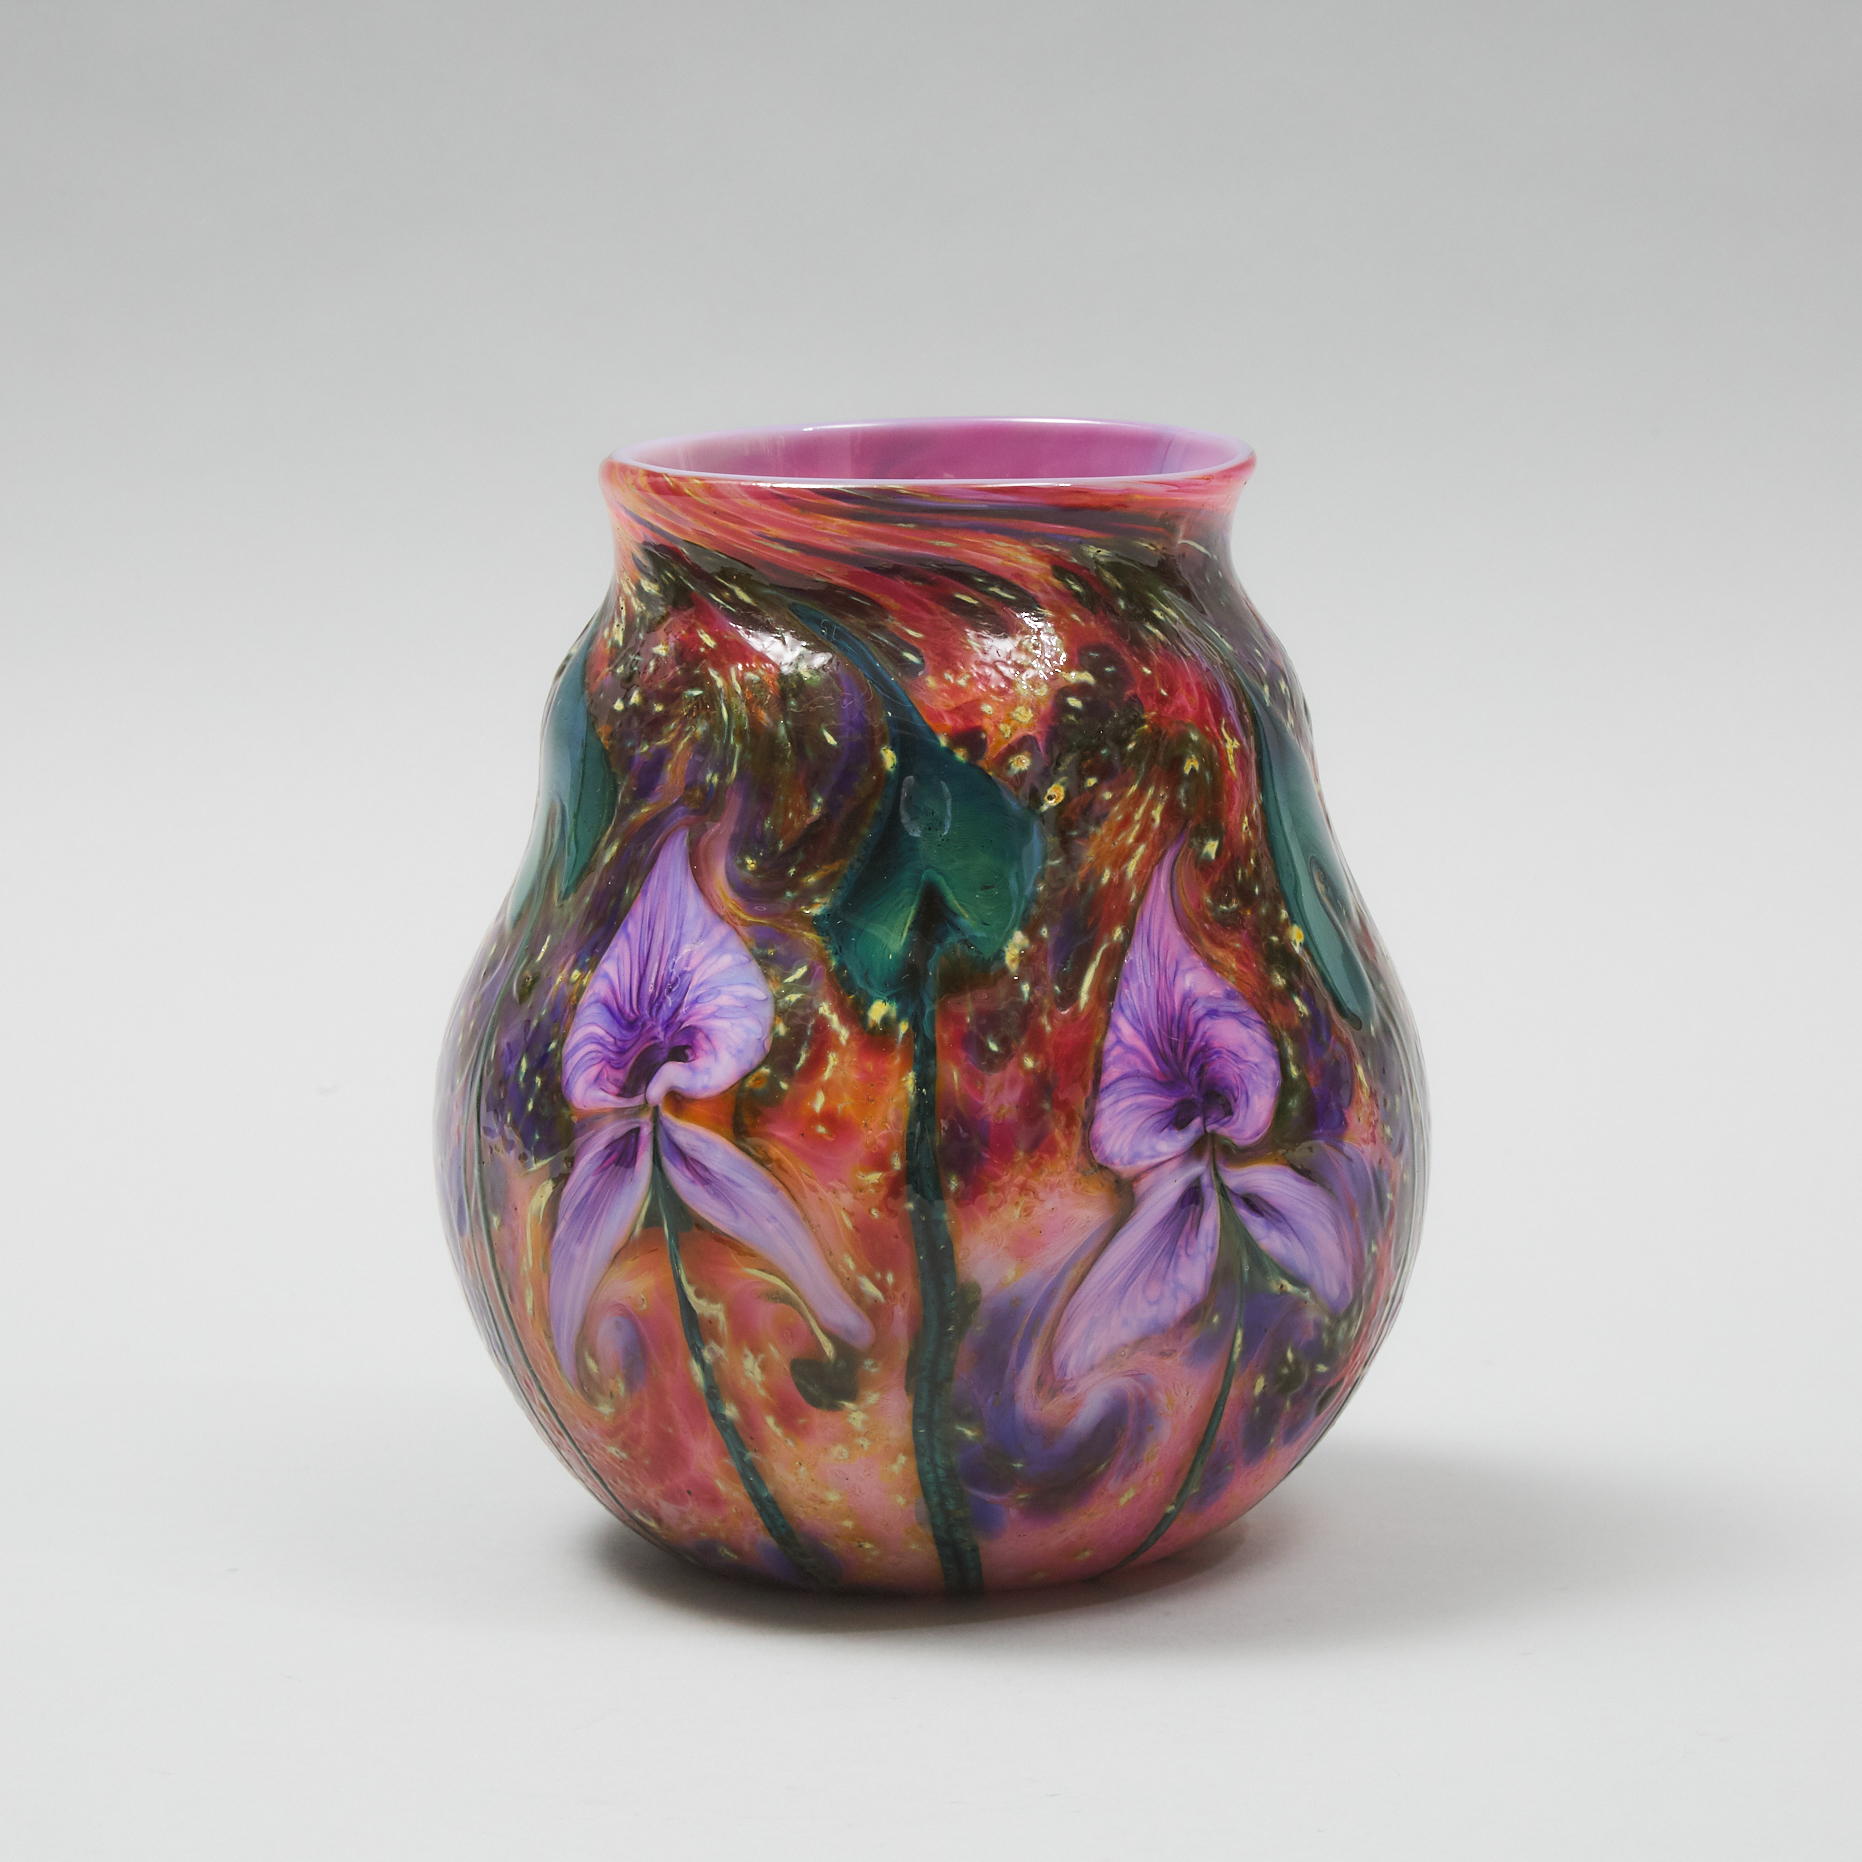 Charles Lotton (American, b.1935), Multi Flora Glass Vase, 2005